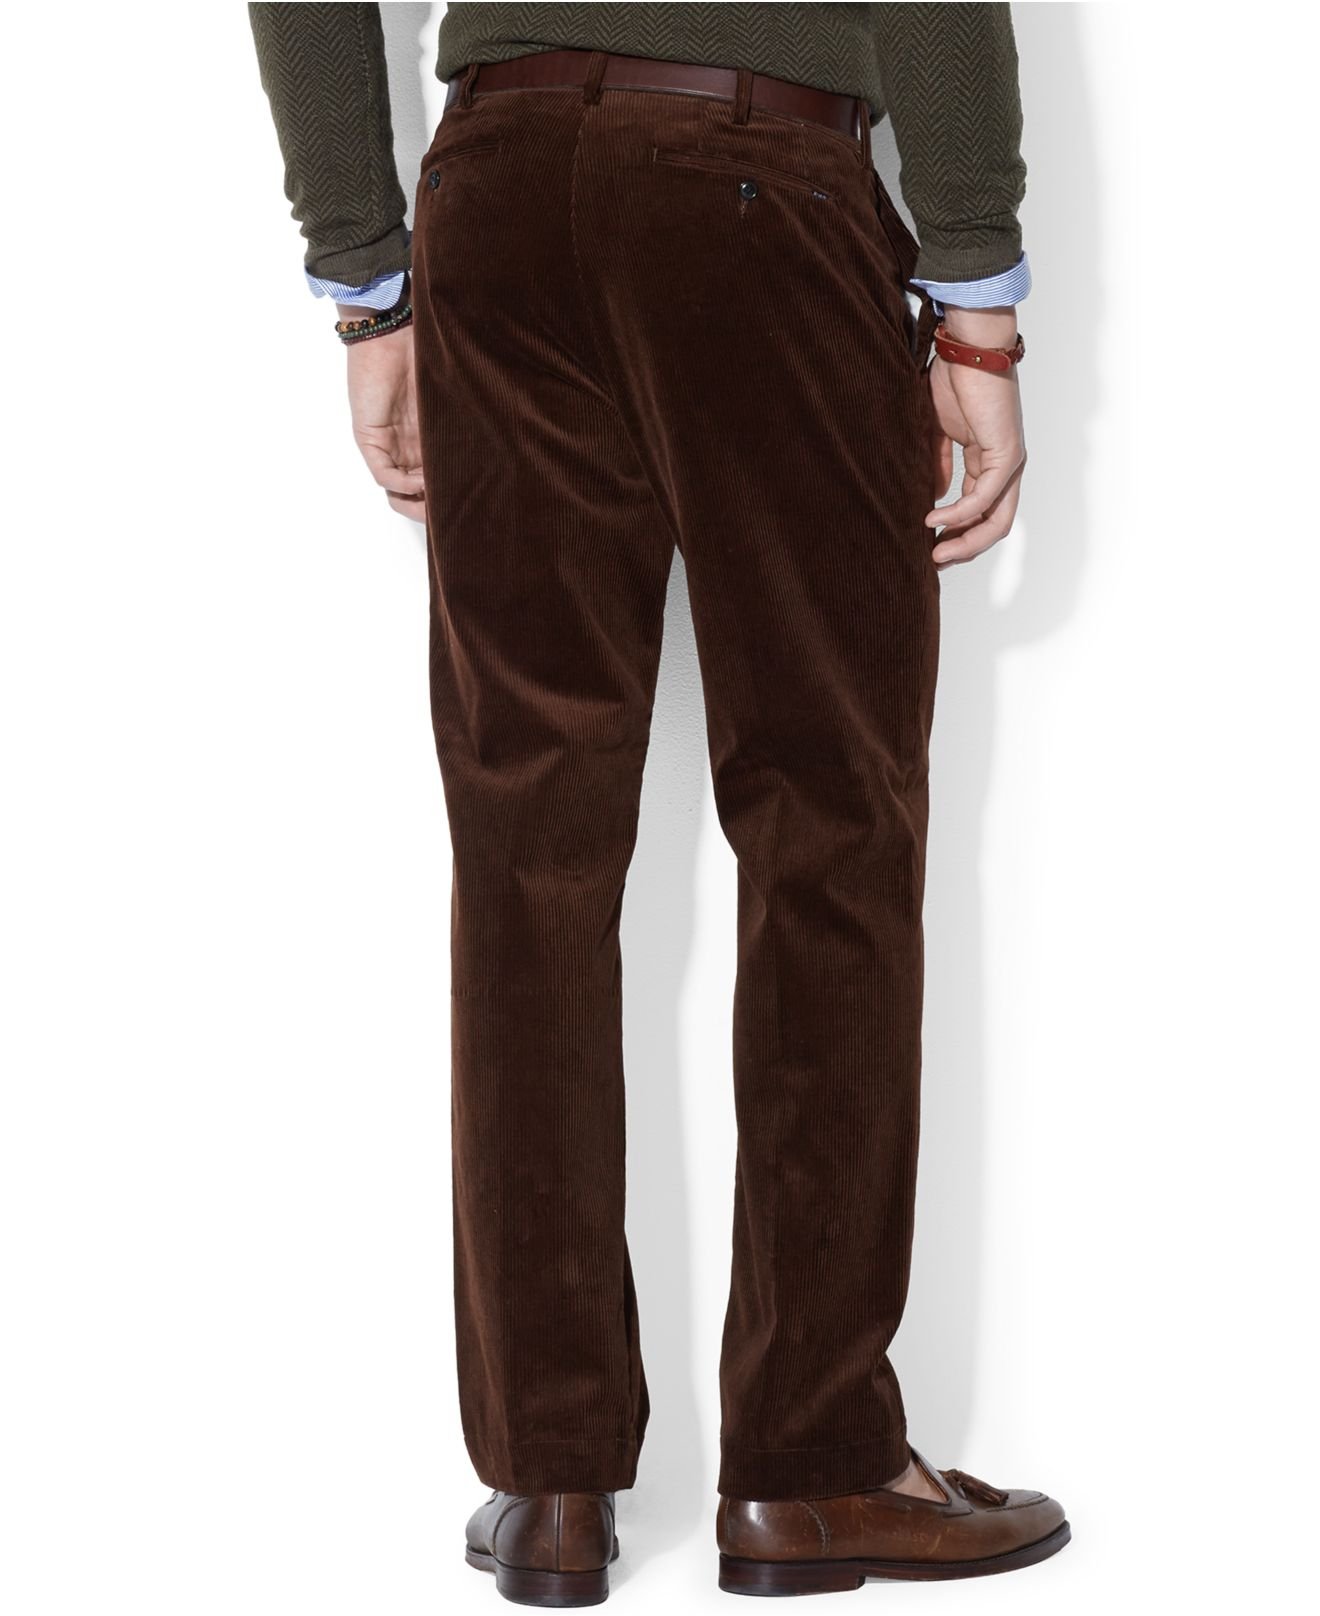 Lyst - Polo Ralph Lauren Classic-Fit Newport Corduroy Pants in Brown